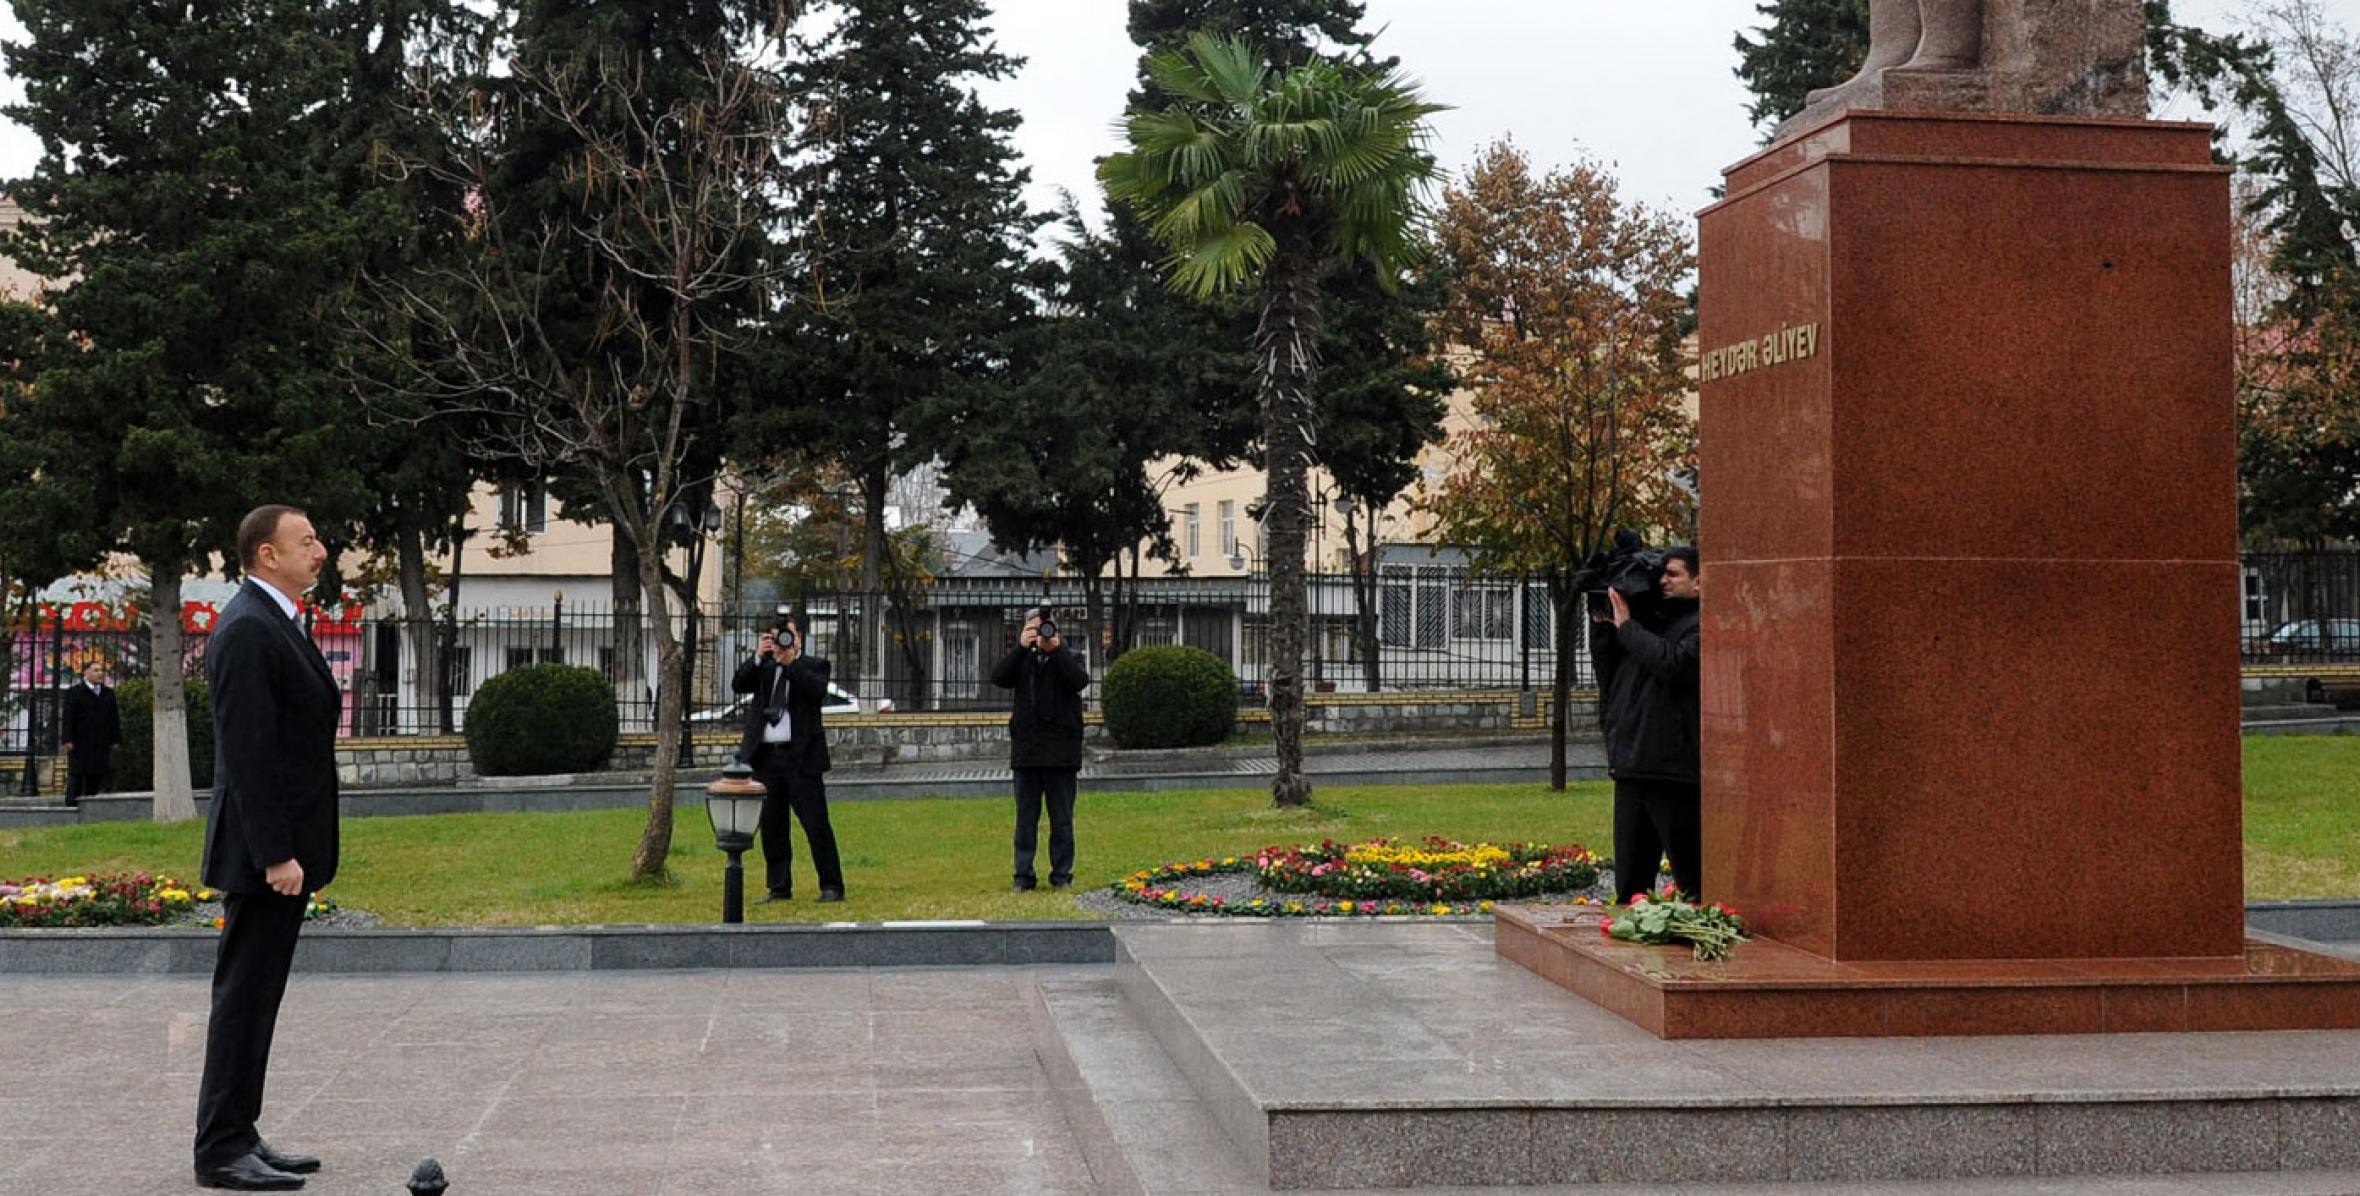 Ilham Aliyev visited the statue of nationwide leader Heydar Aliyev in Shaki